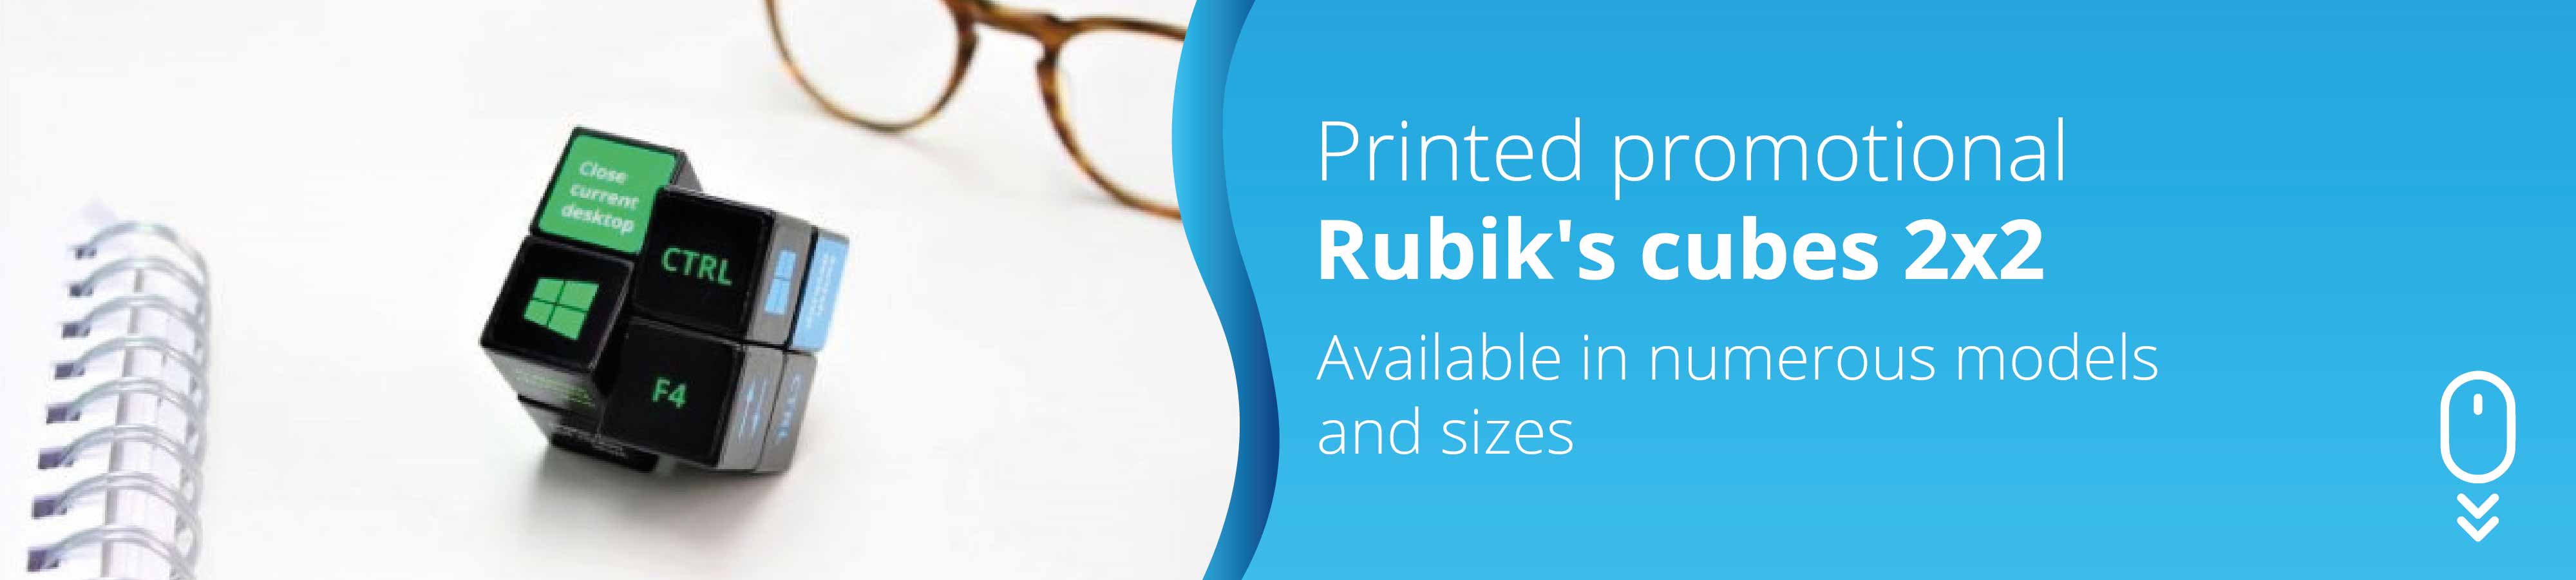 printed-promotional-rubiks-cube-2x2HTBDMnHH5ZYw2